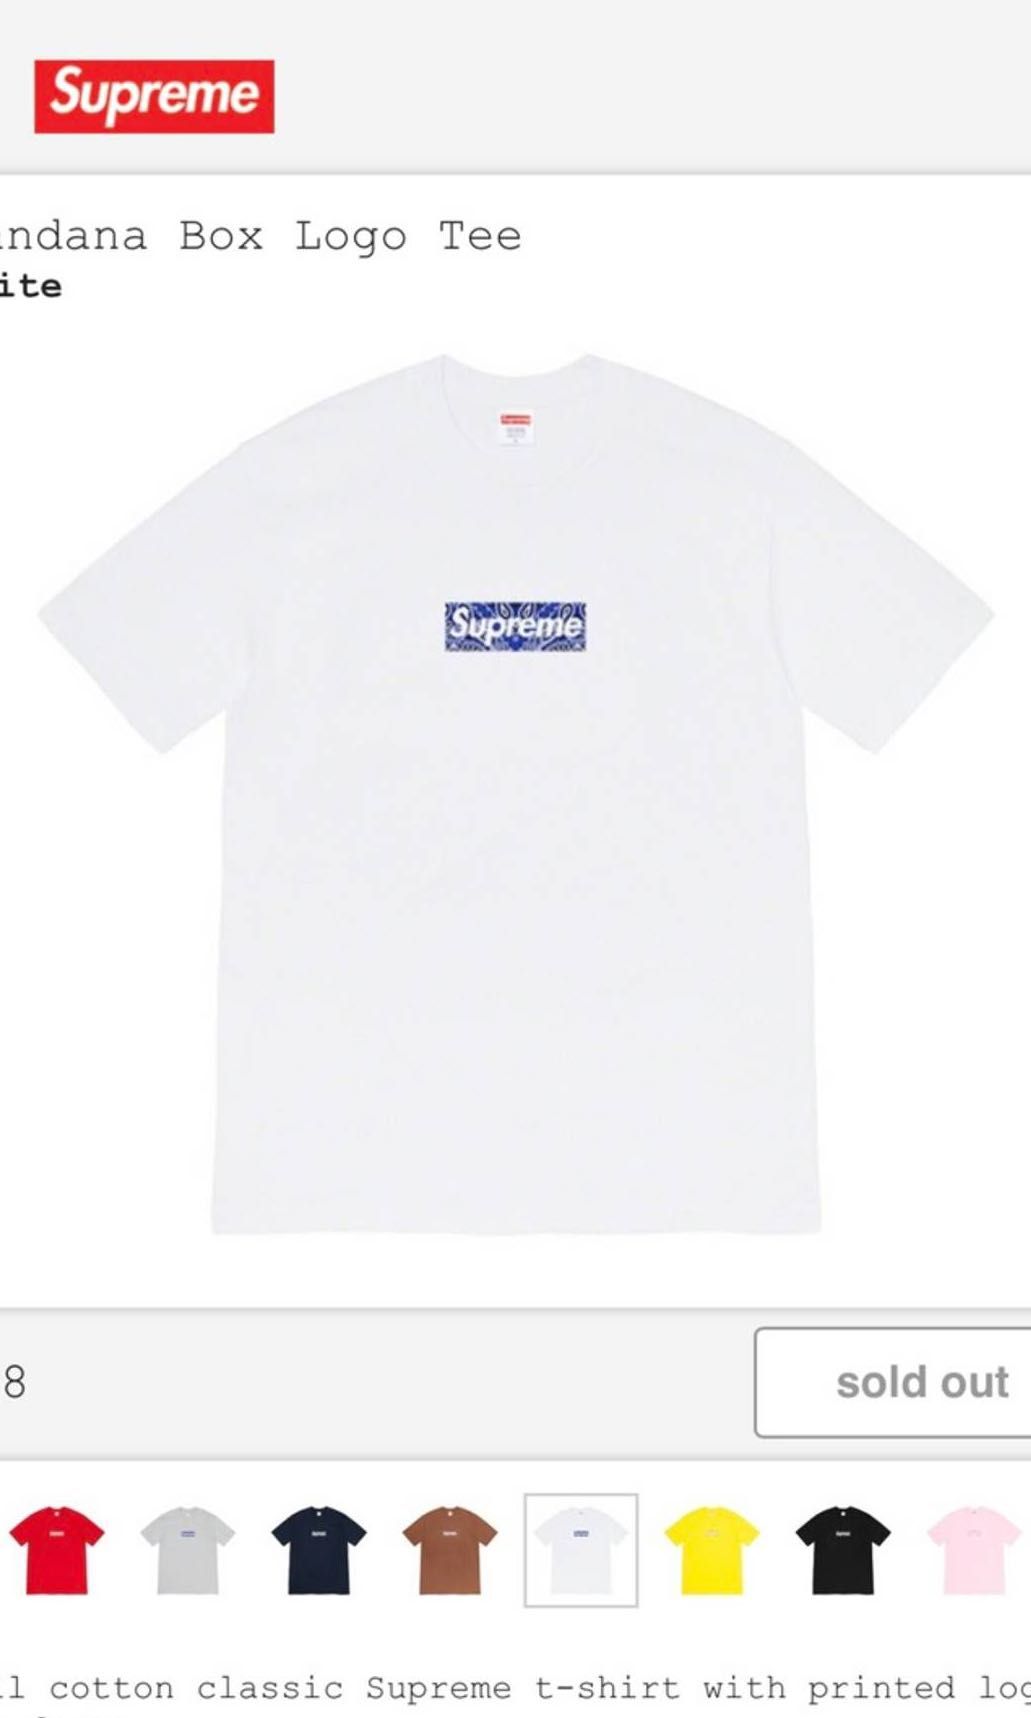 Supreme Bandana Box Logo Blue White T Shirt Tee